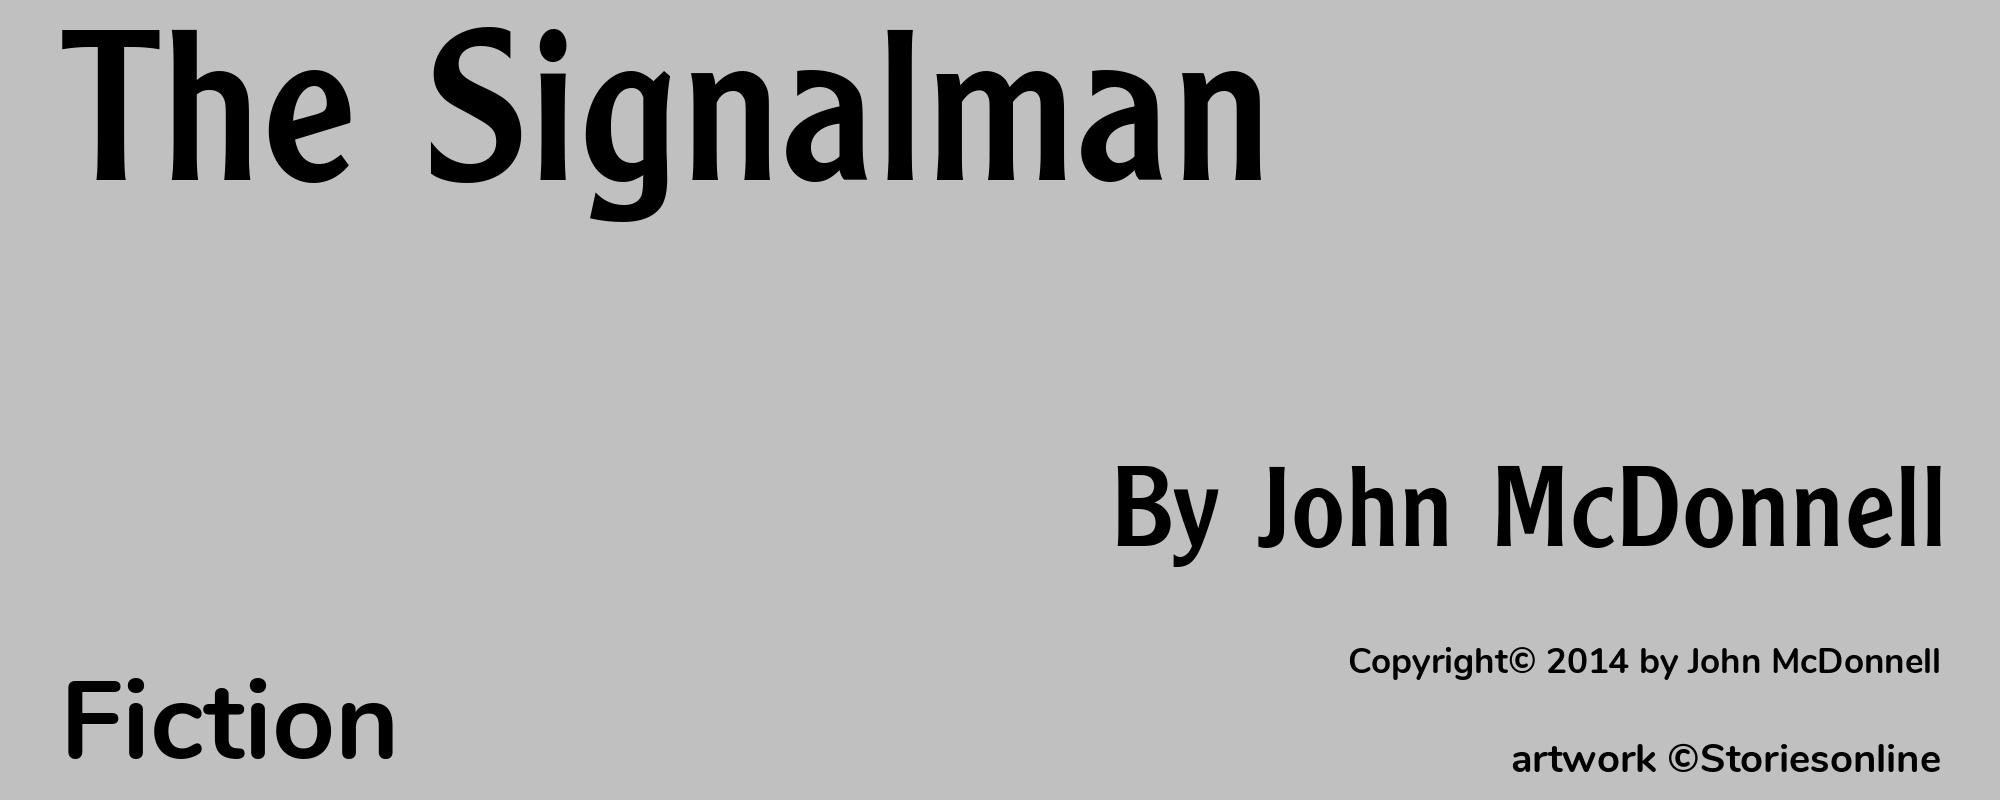 The Signalman - Cover